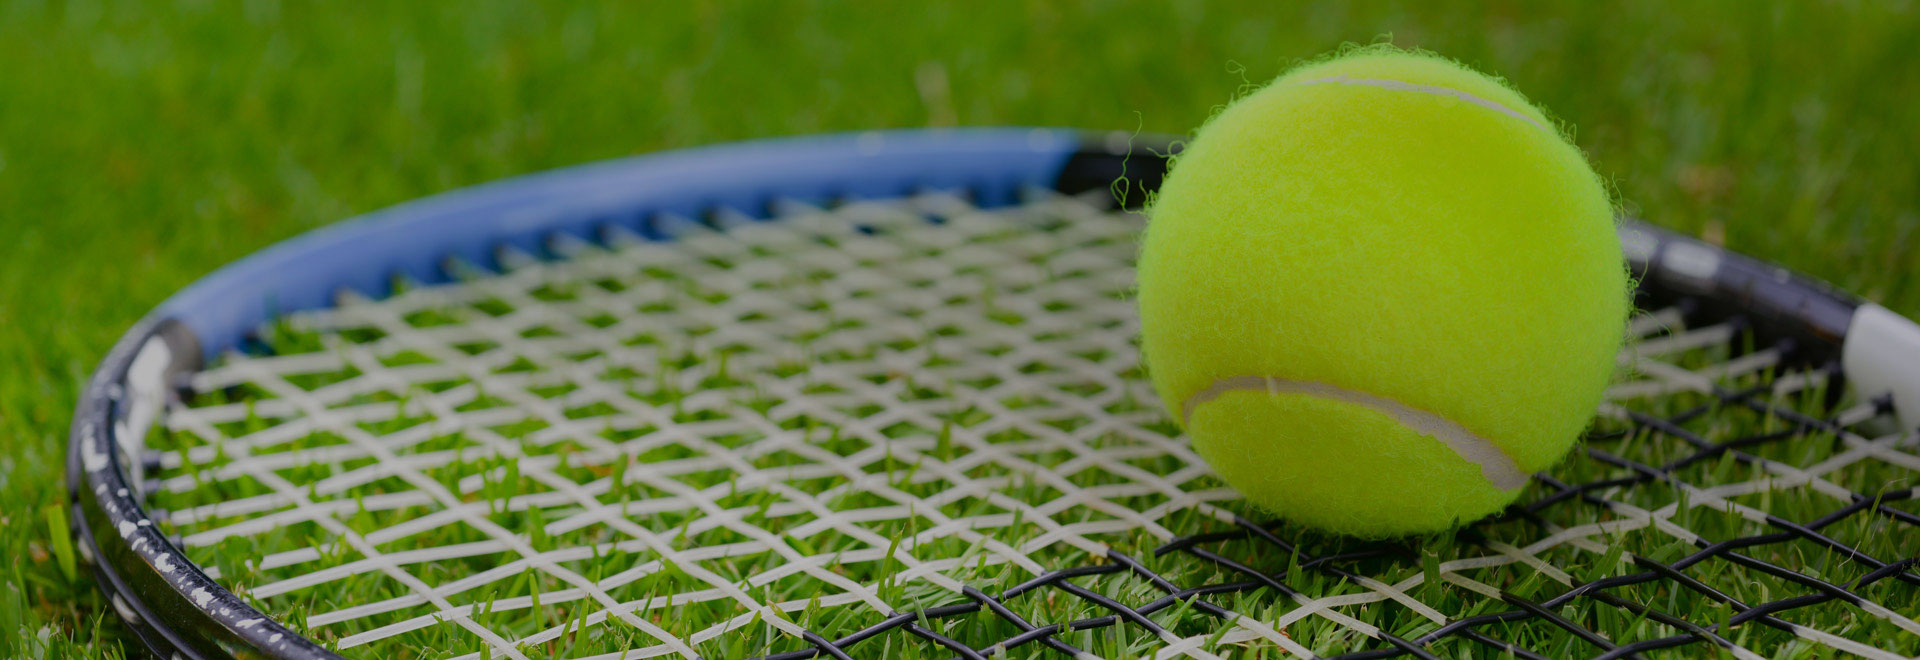 tennis ball and racket on grass